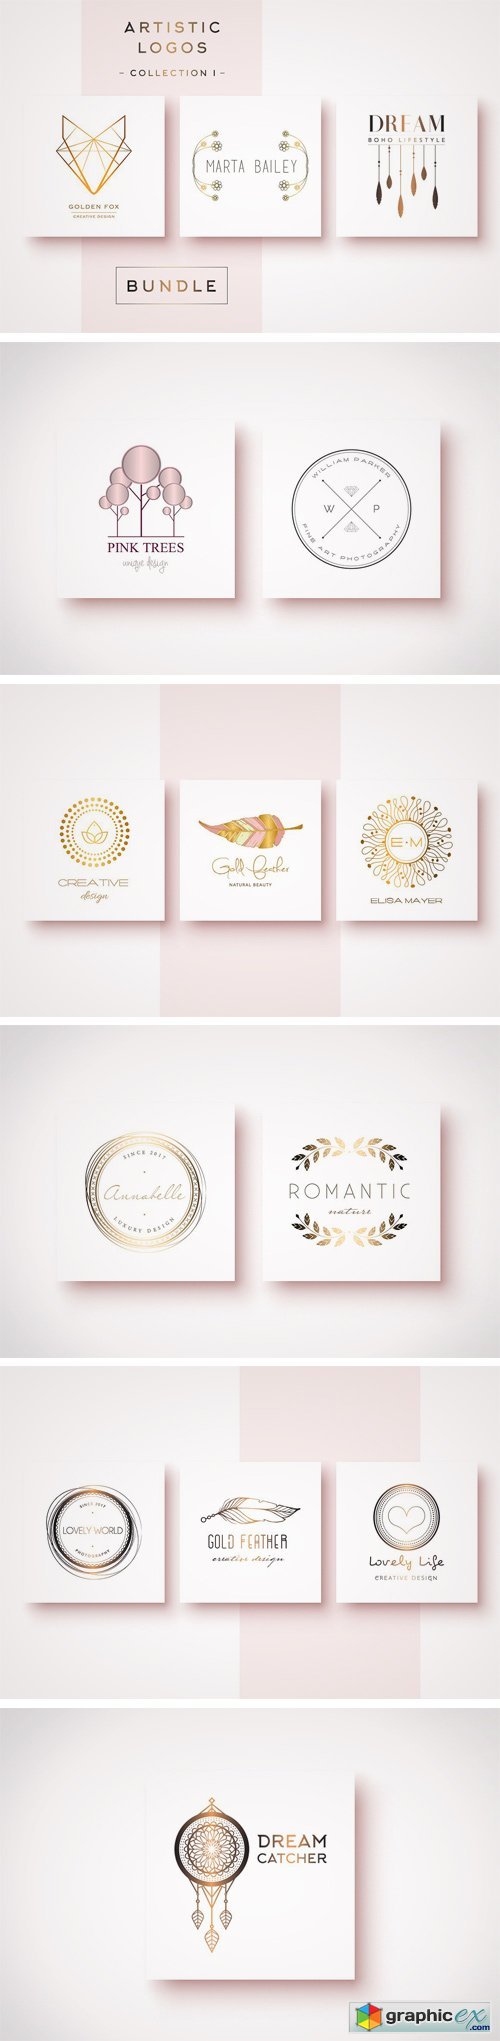 BUNDLE - Artistic Logos Collection